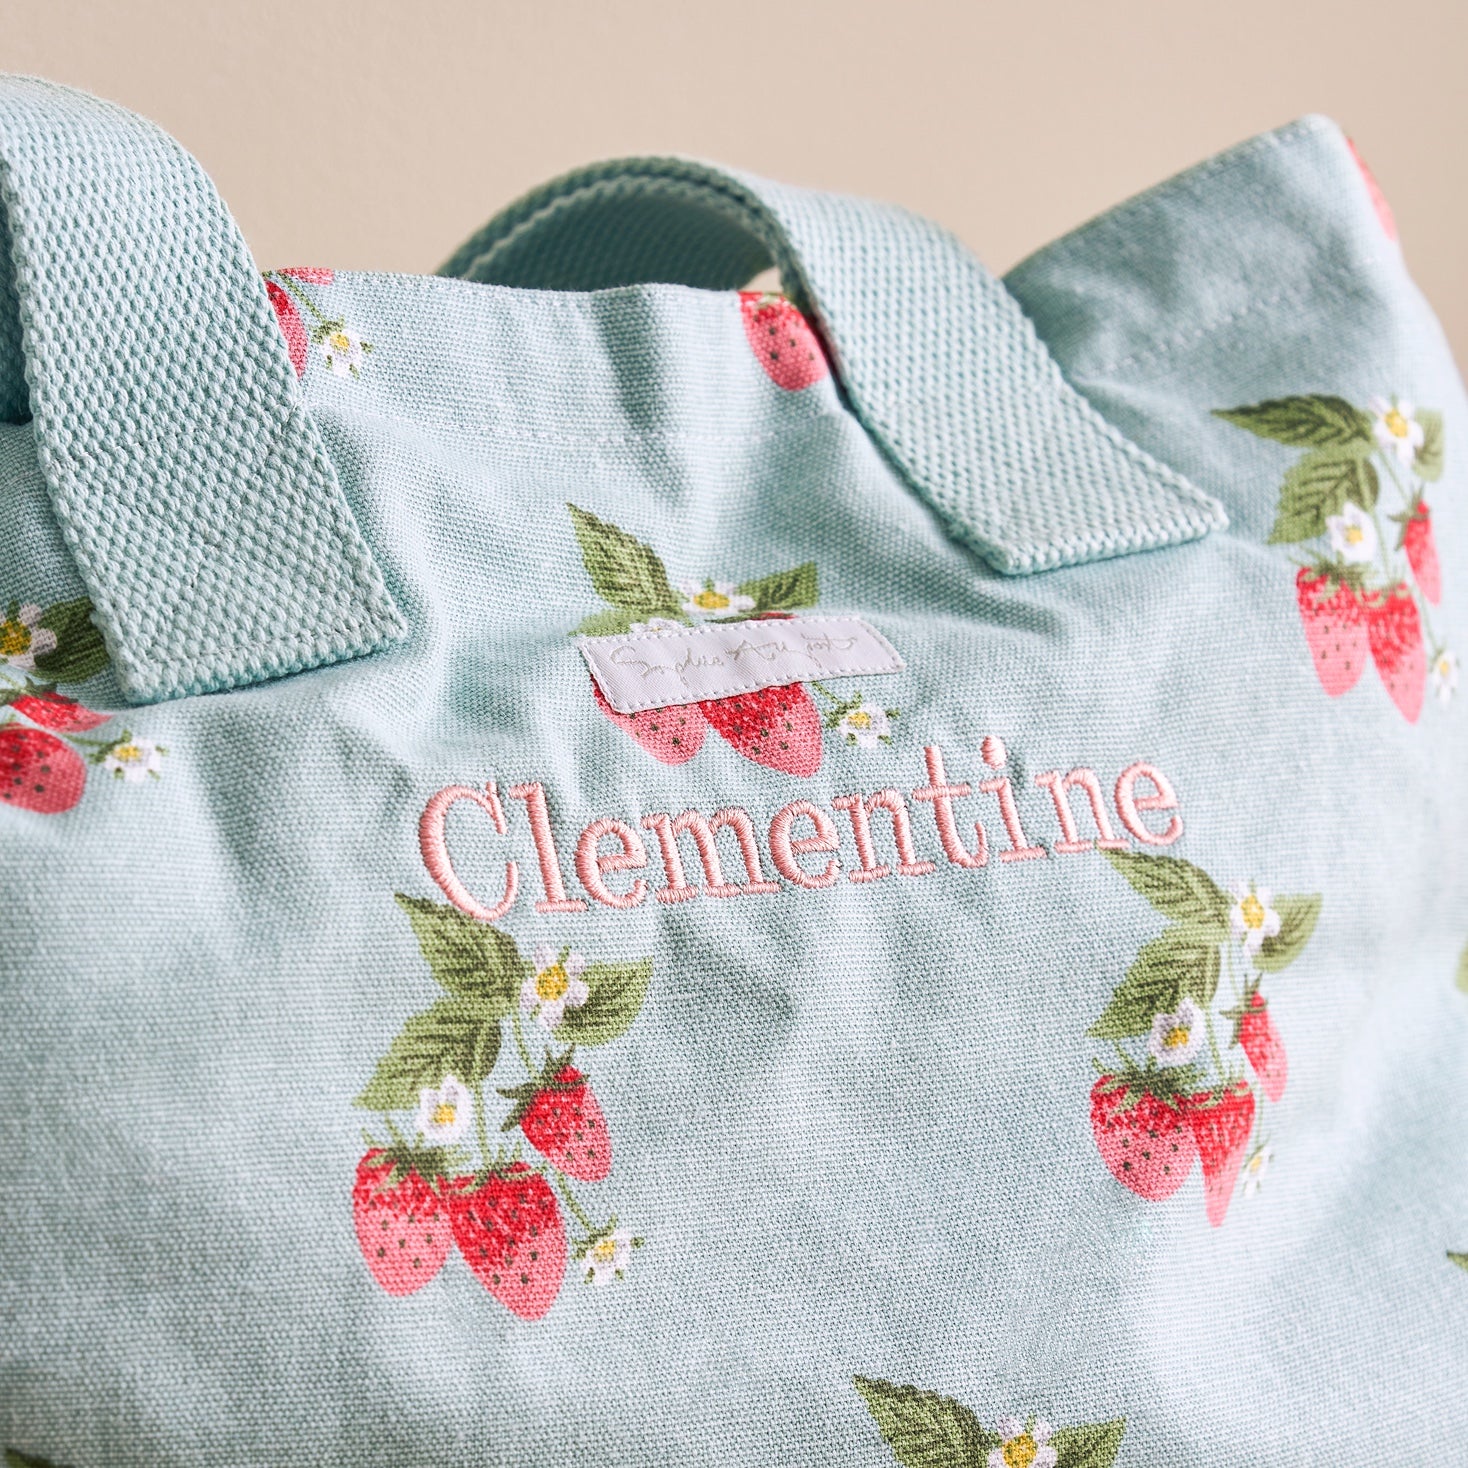 Strawberries Blue Everyday Bag by Sophie Allport